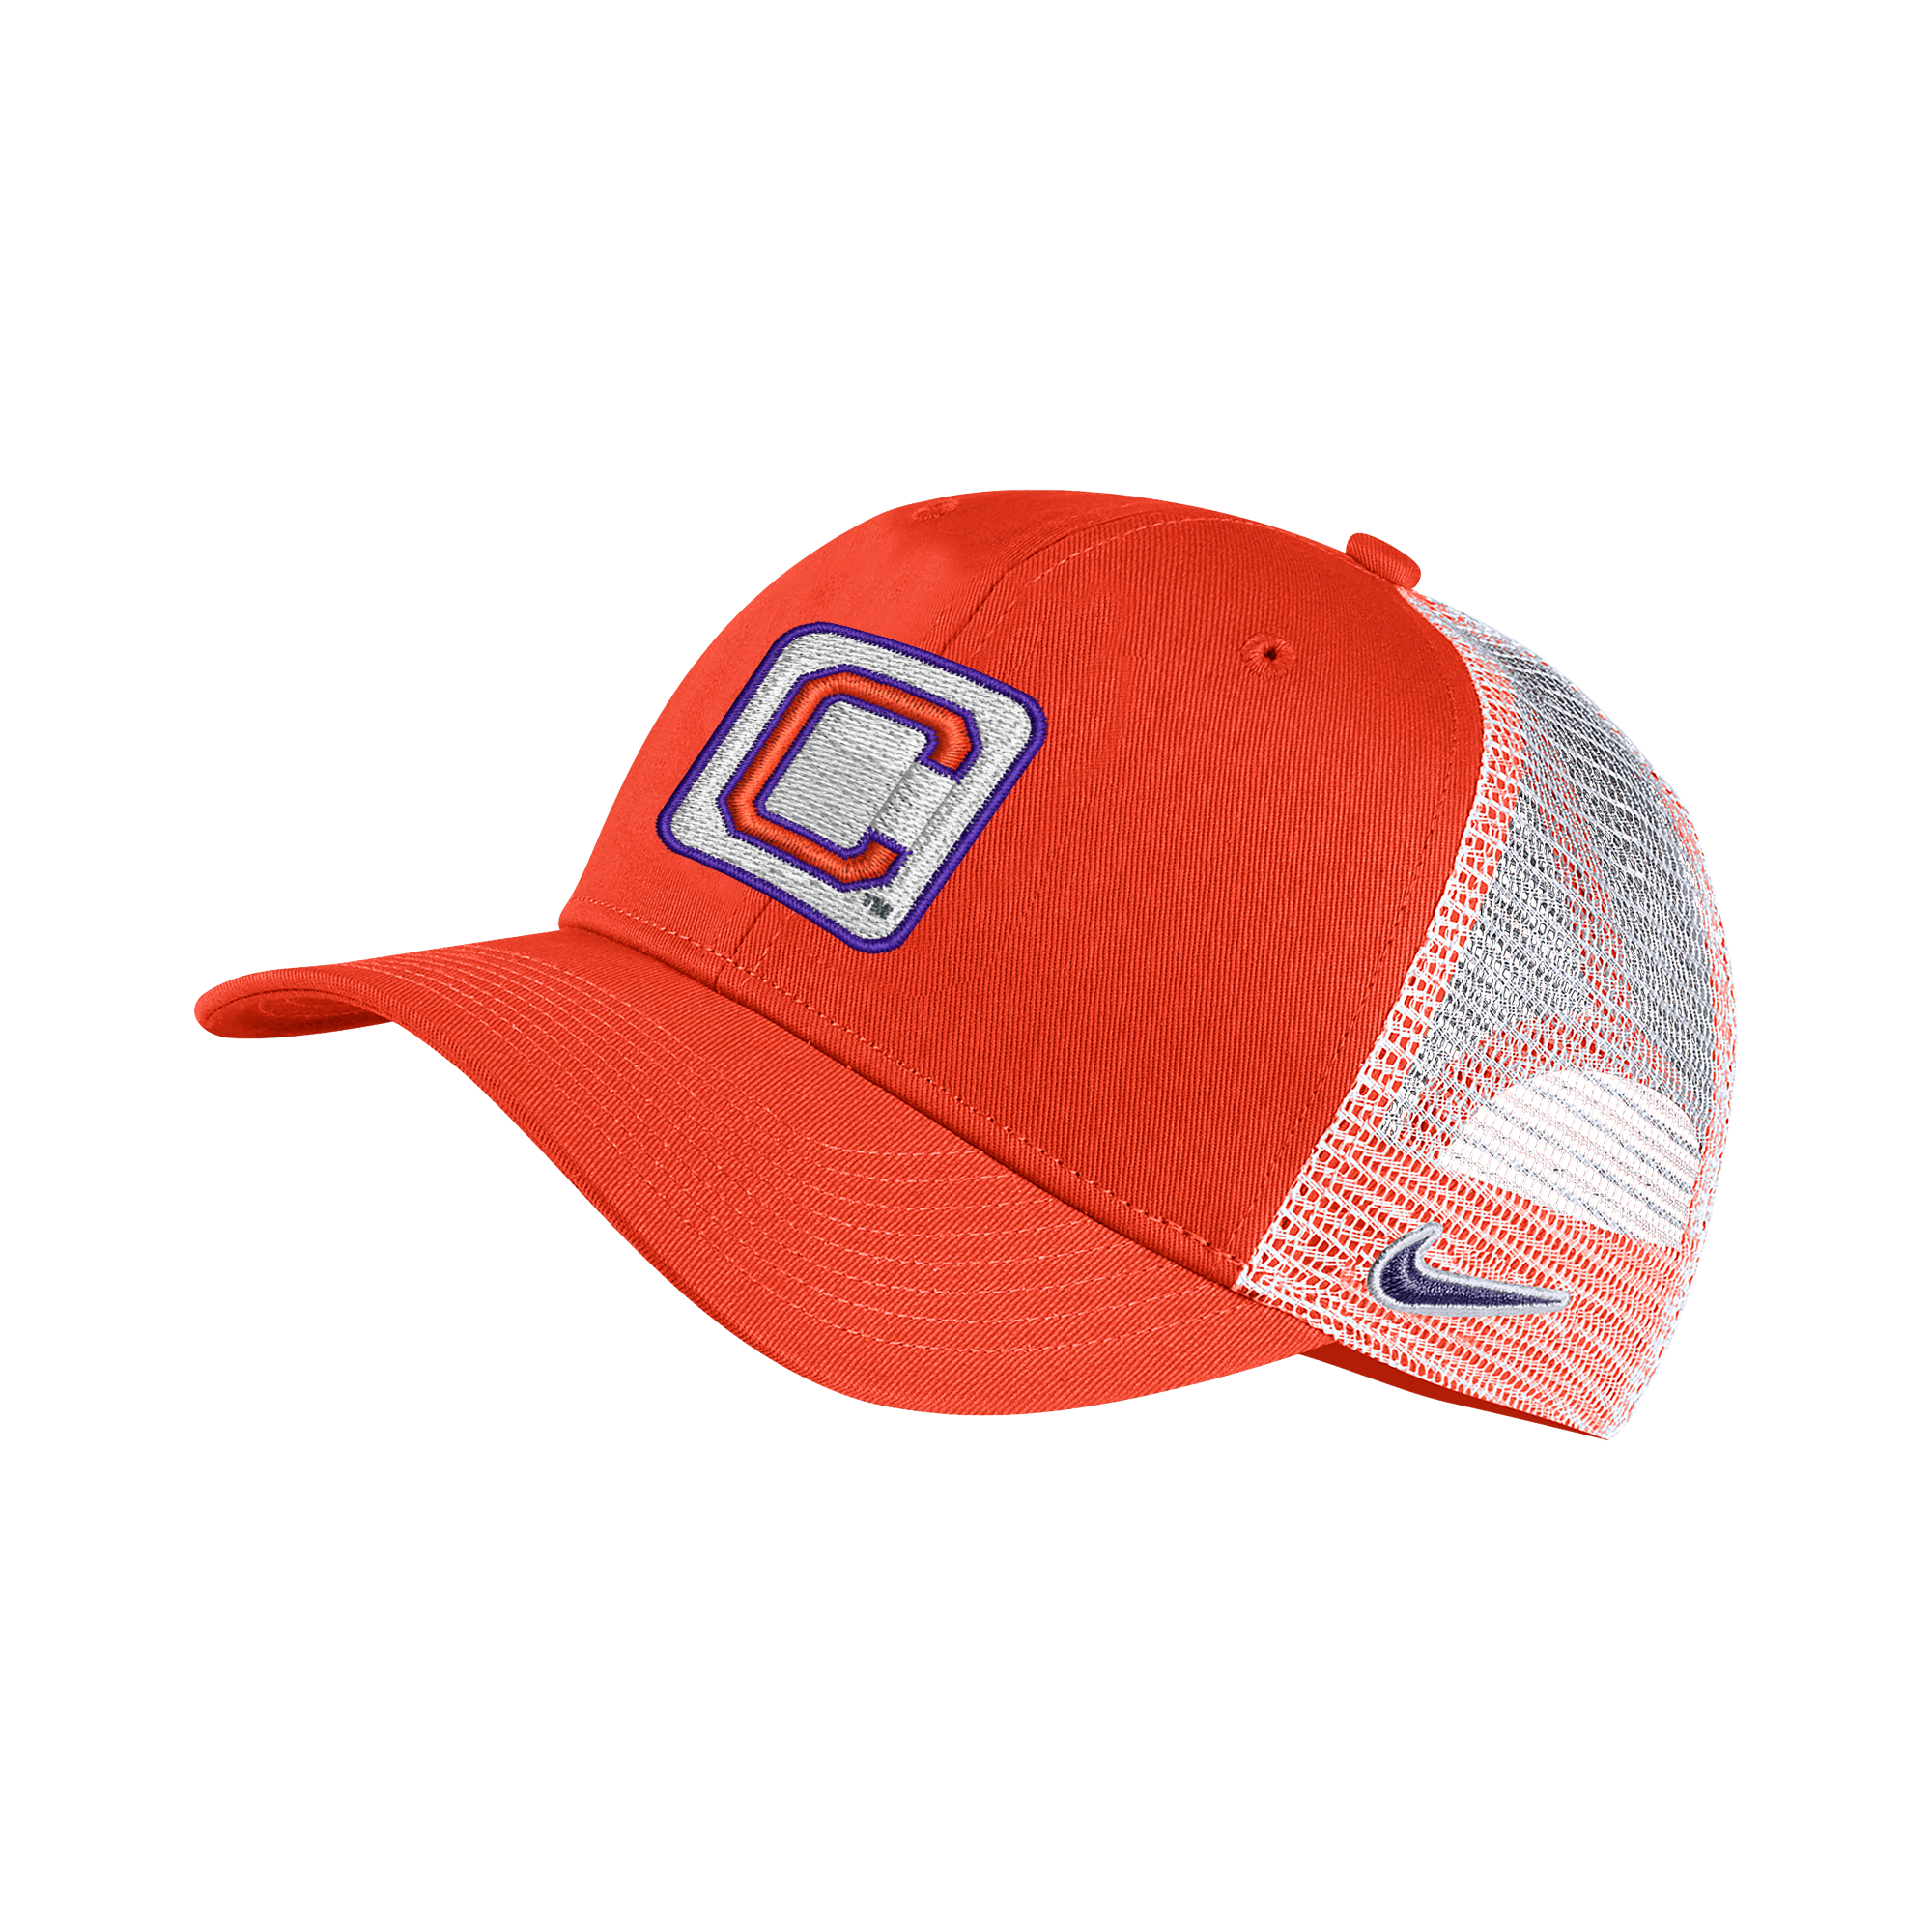 Nike C99 Trucker Hat with Baseball C